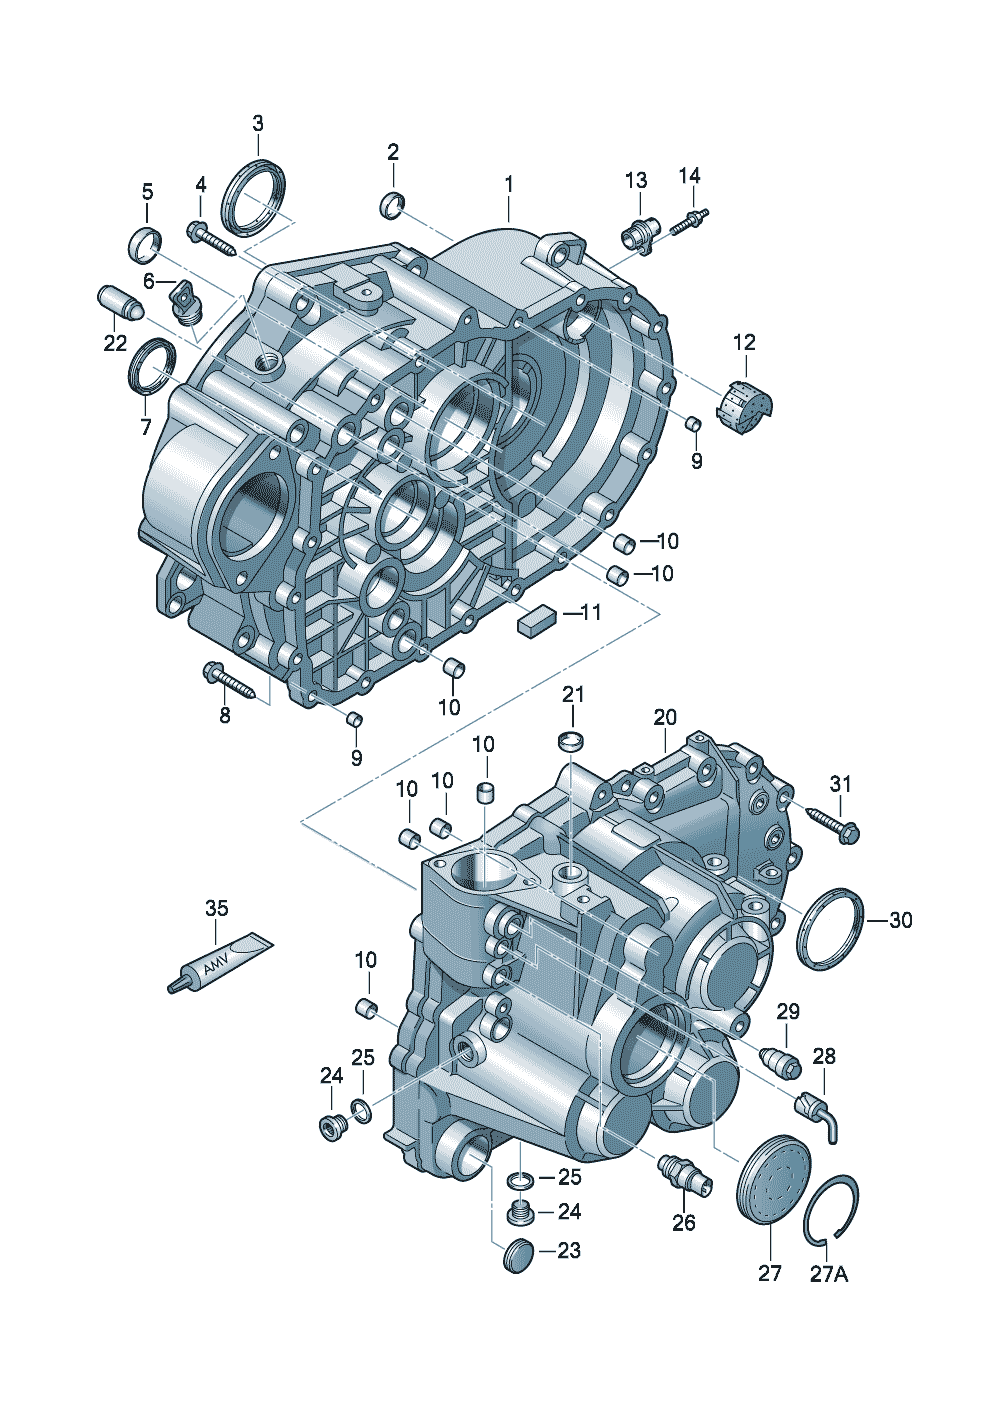 Gear housingfor 6 speed manual gearboxfor four-wheel drive 2.0 Ltr. - Audi TT/TTS Coupe/Roadster - att